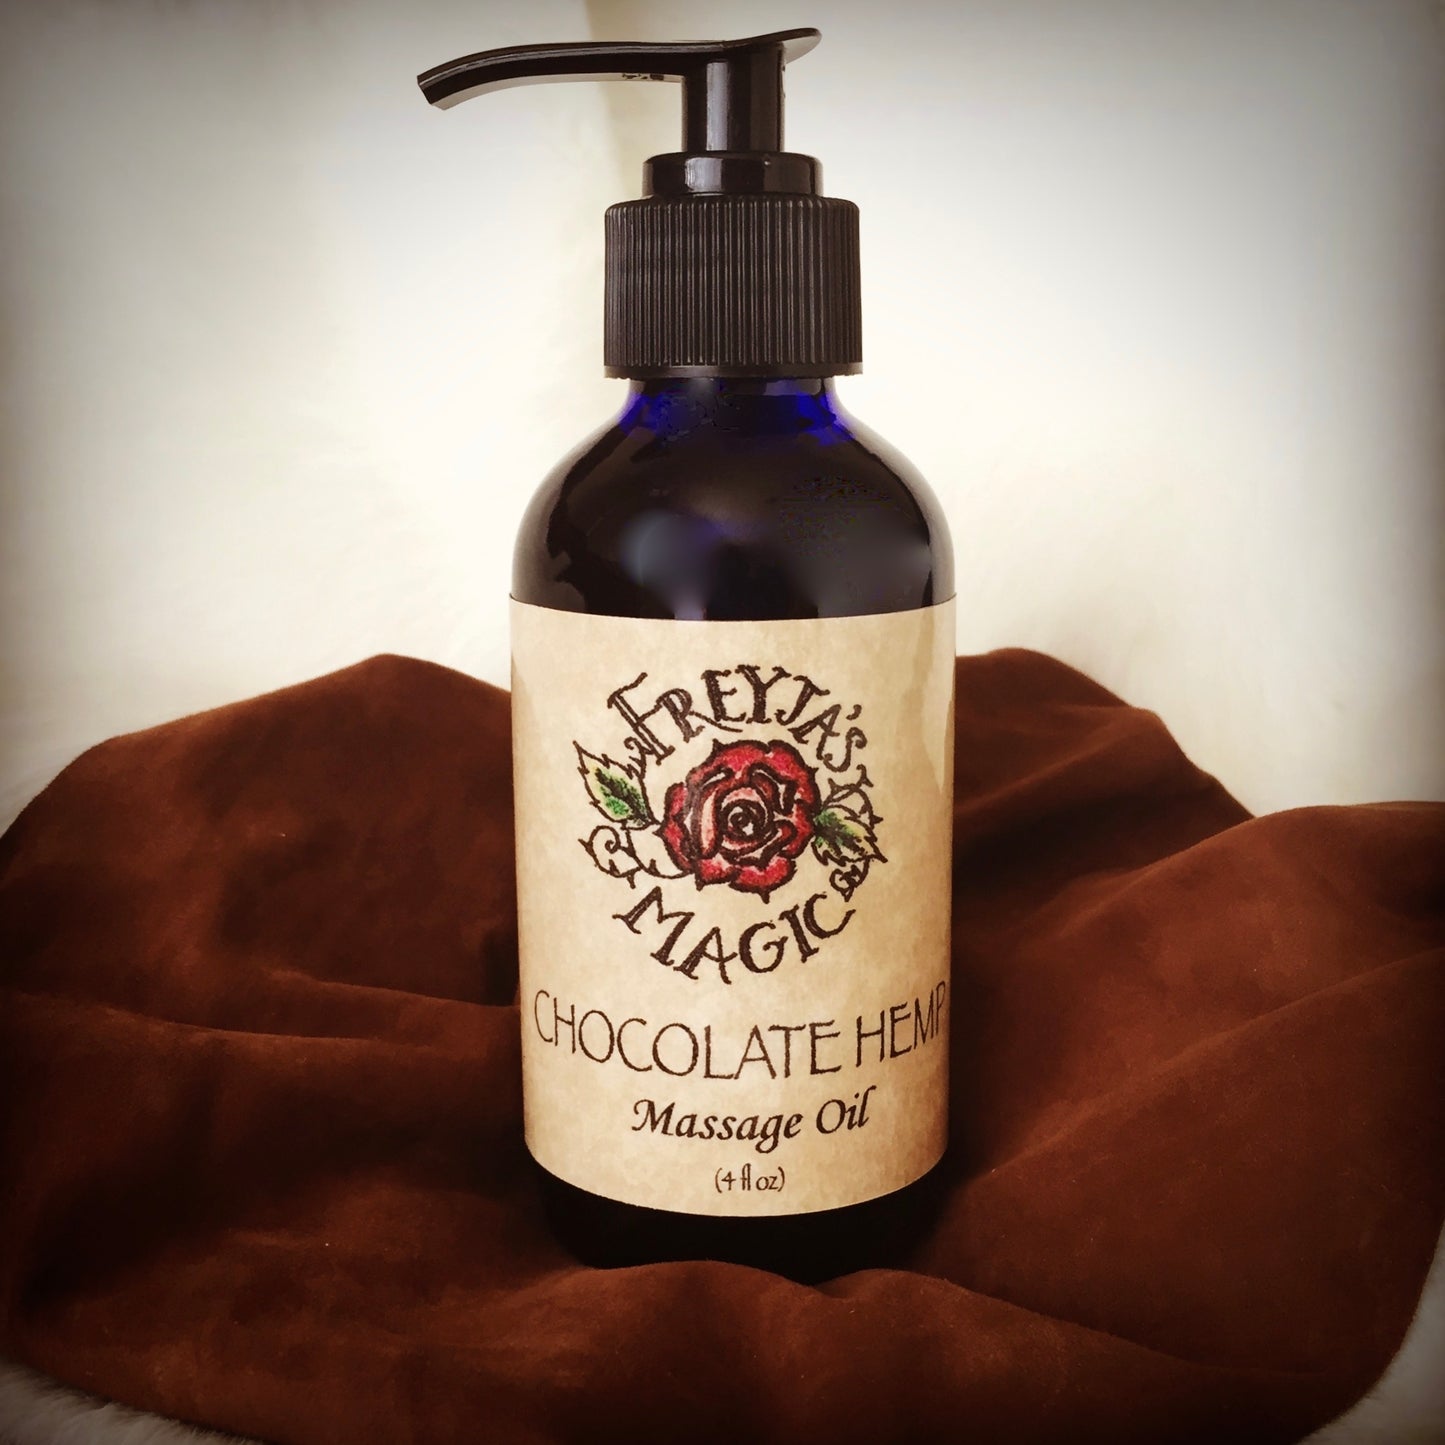 Chocolate Hemp Seed Massage & Body Oil | Silky, Sensual, Romantic | Couples Massage Oil, Bath and Body Oil, Freyja's Magic Oil